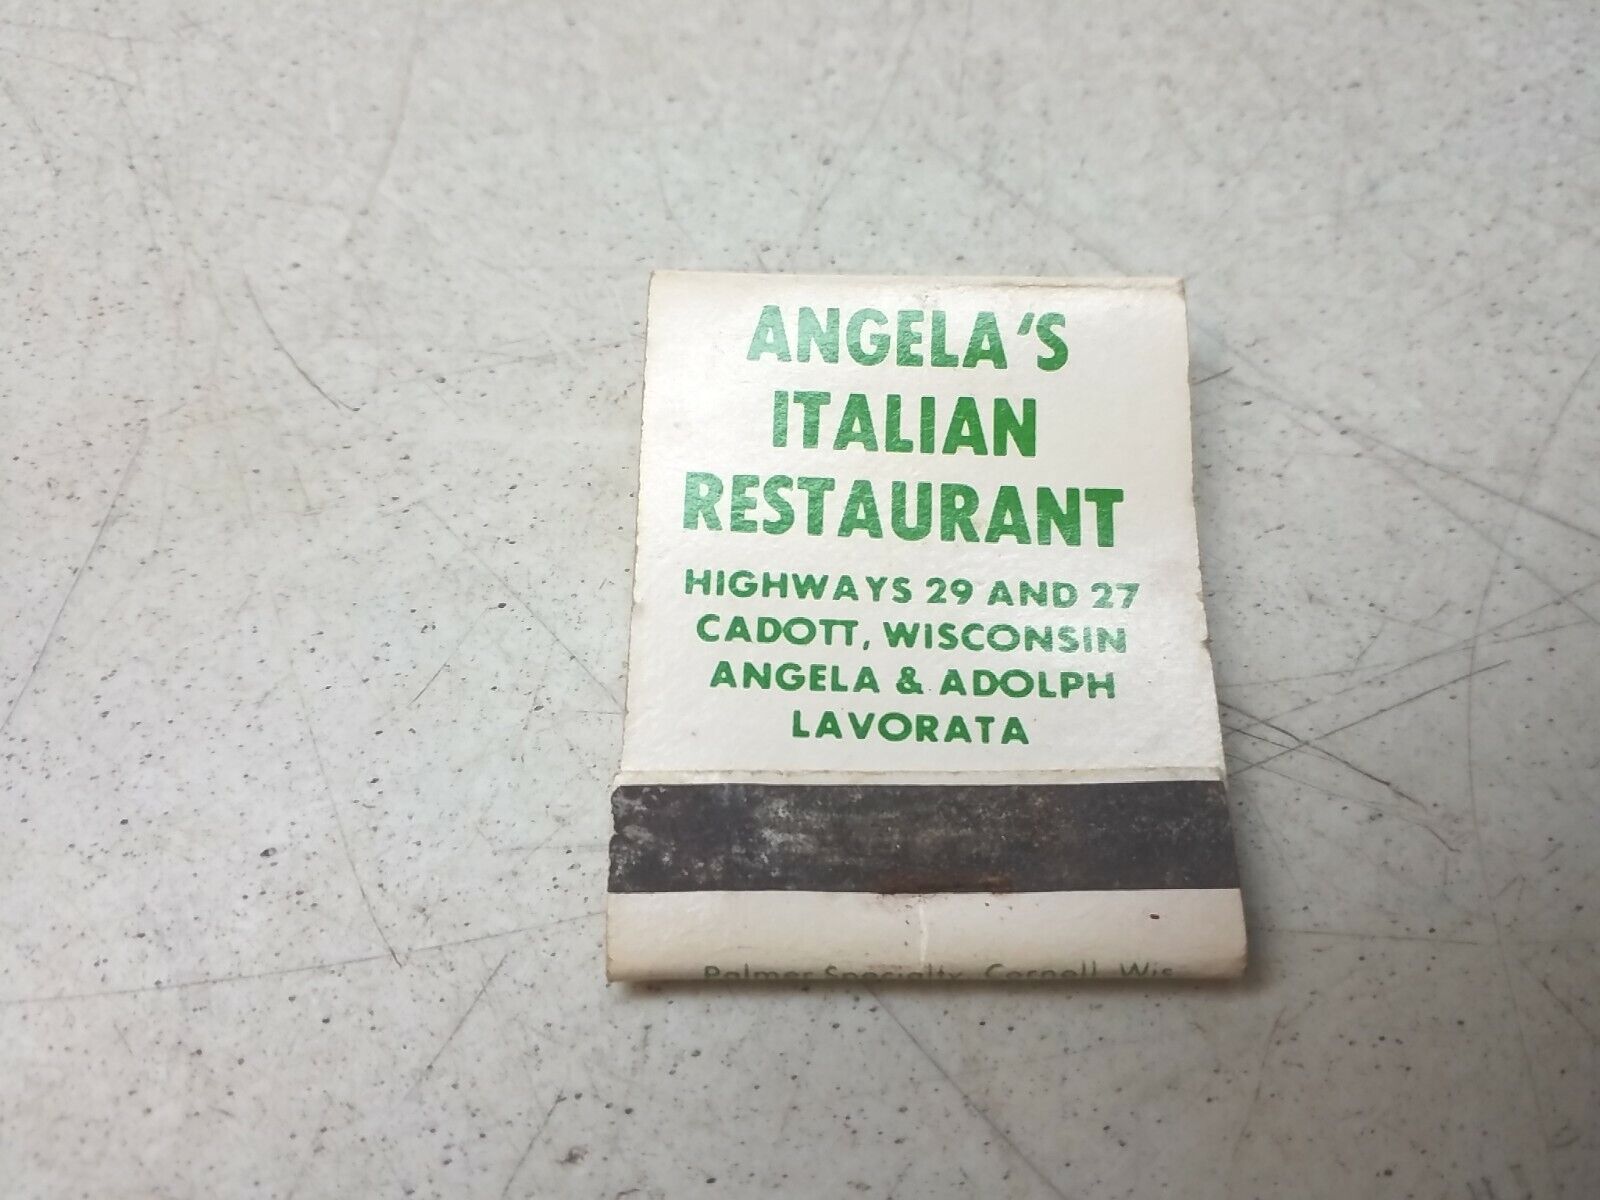 Angelas Italian Restaurant Cadott Wisconsin Matchbook Cover Vintage Advertising